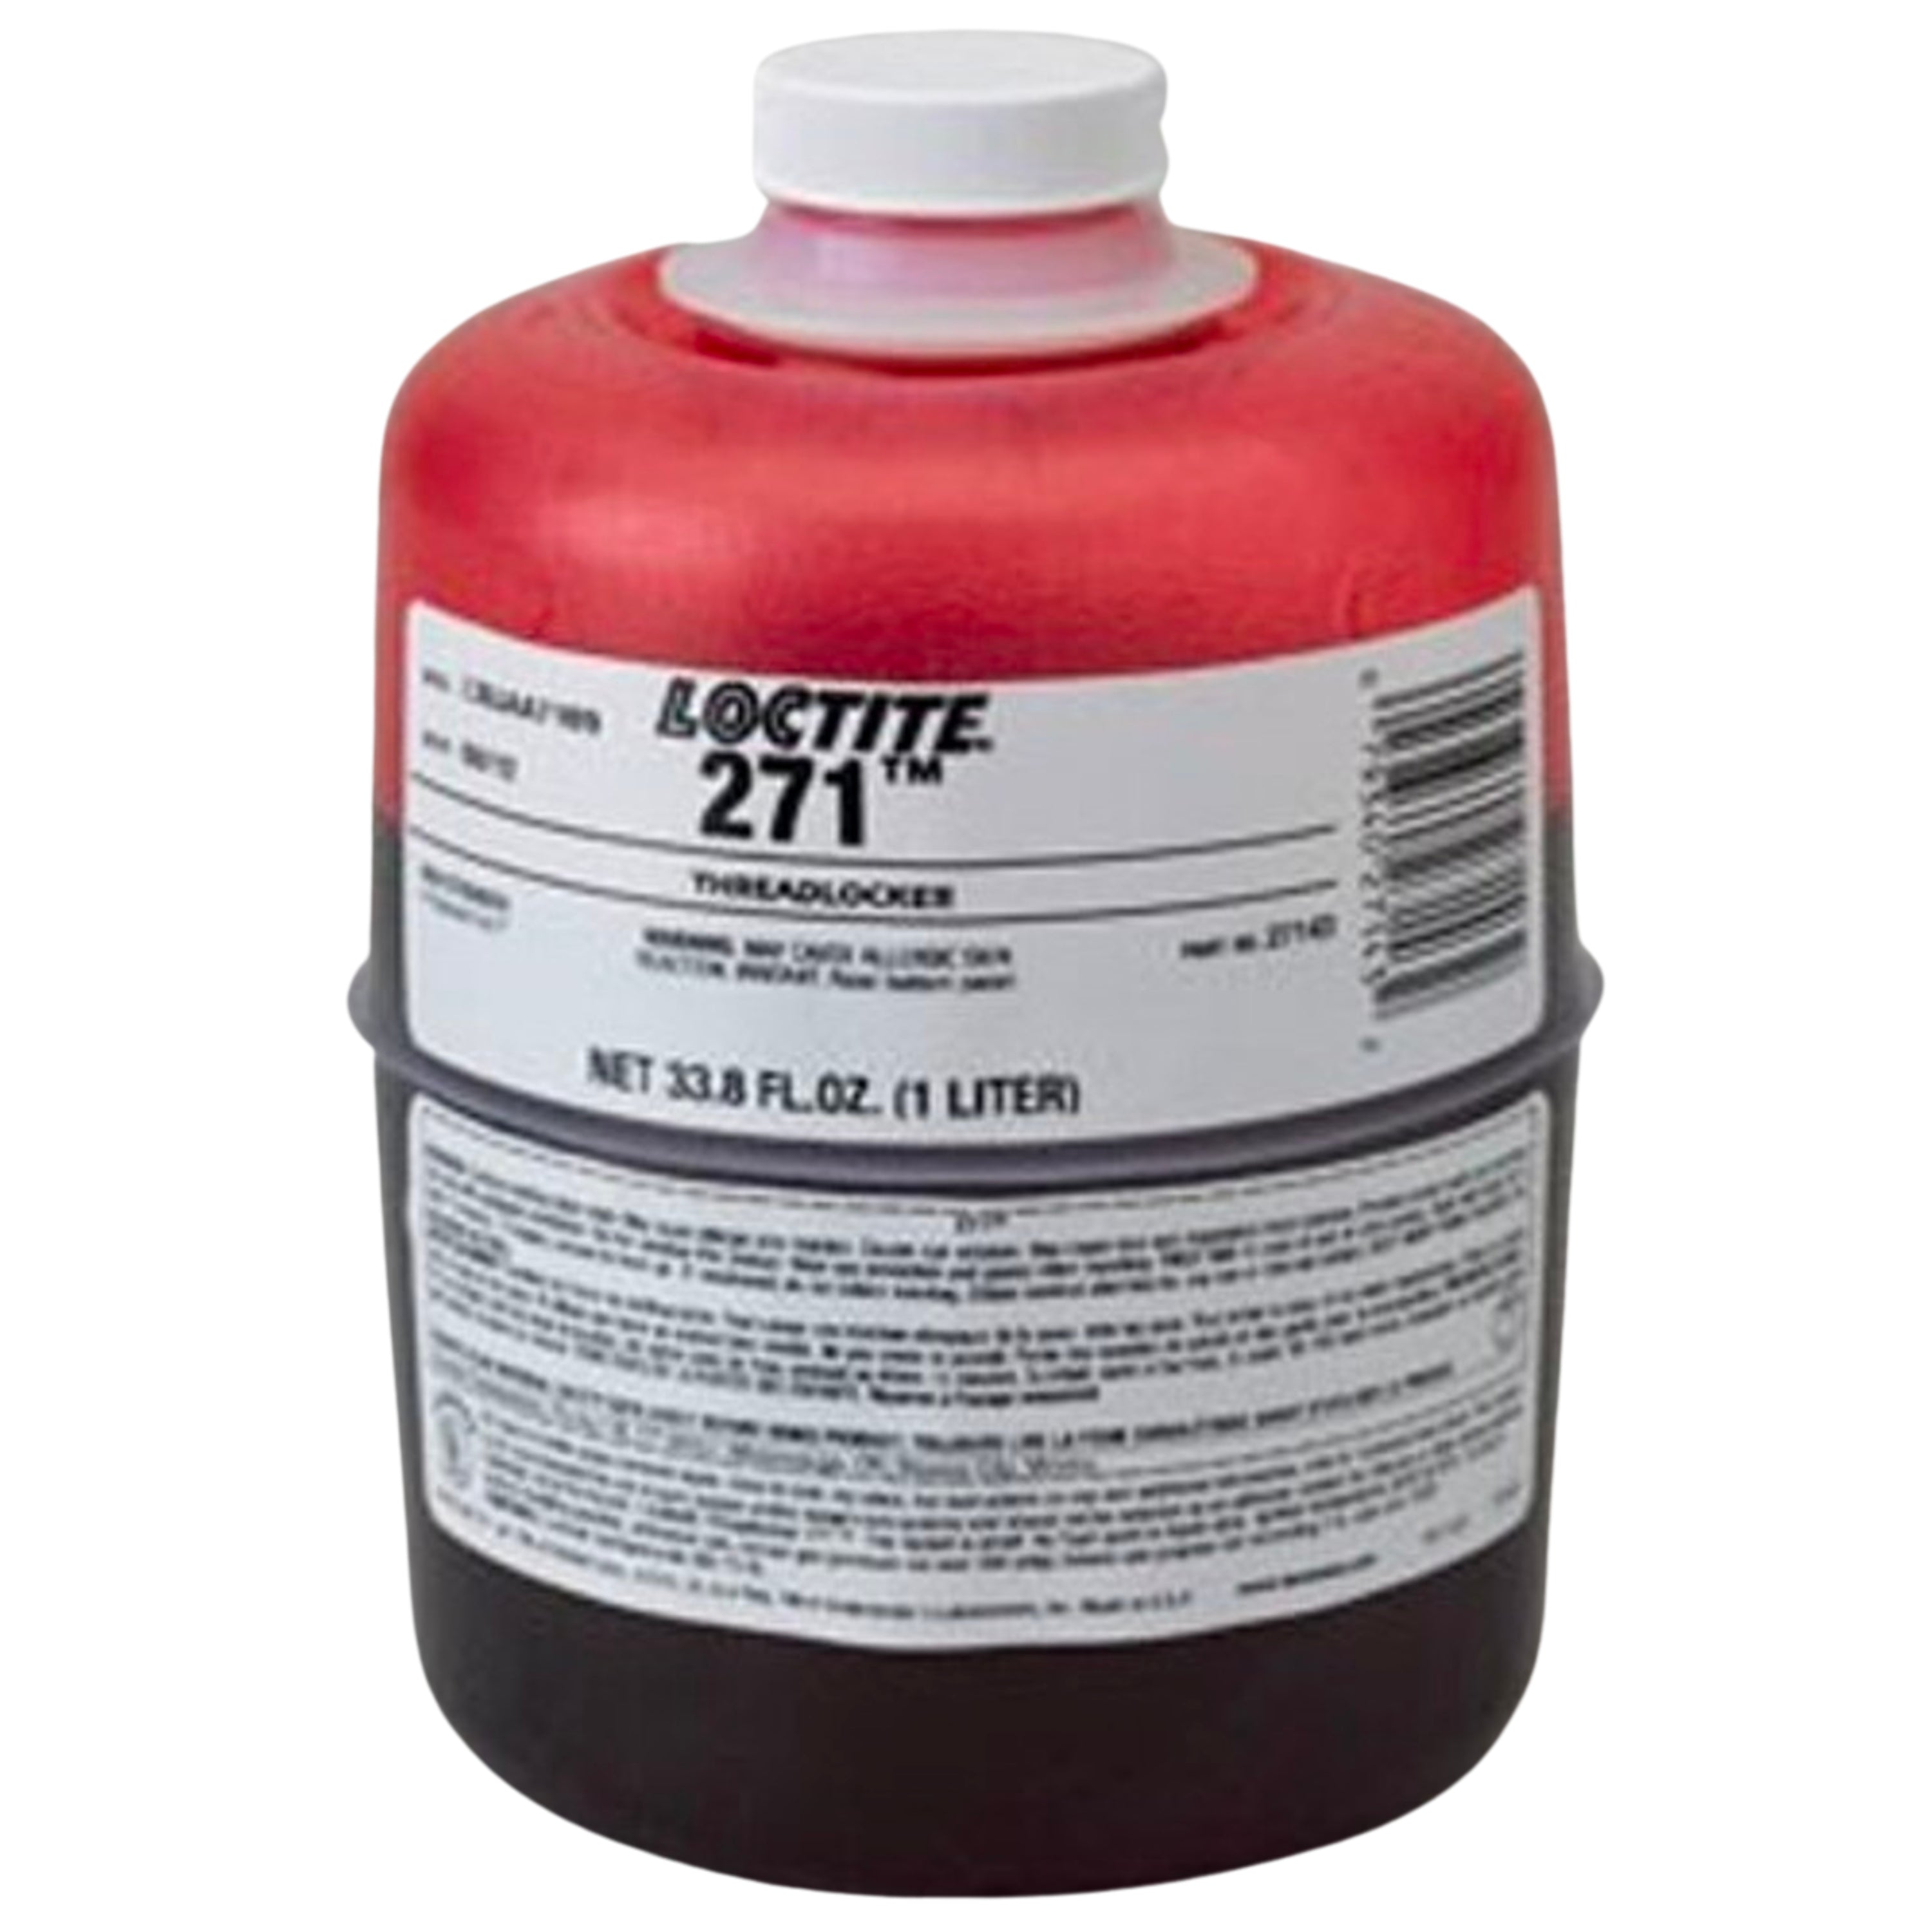 Loctite 271 High Strength (Red) Threadlocker, 6 ml - Pegasus Auto